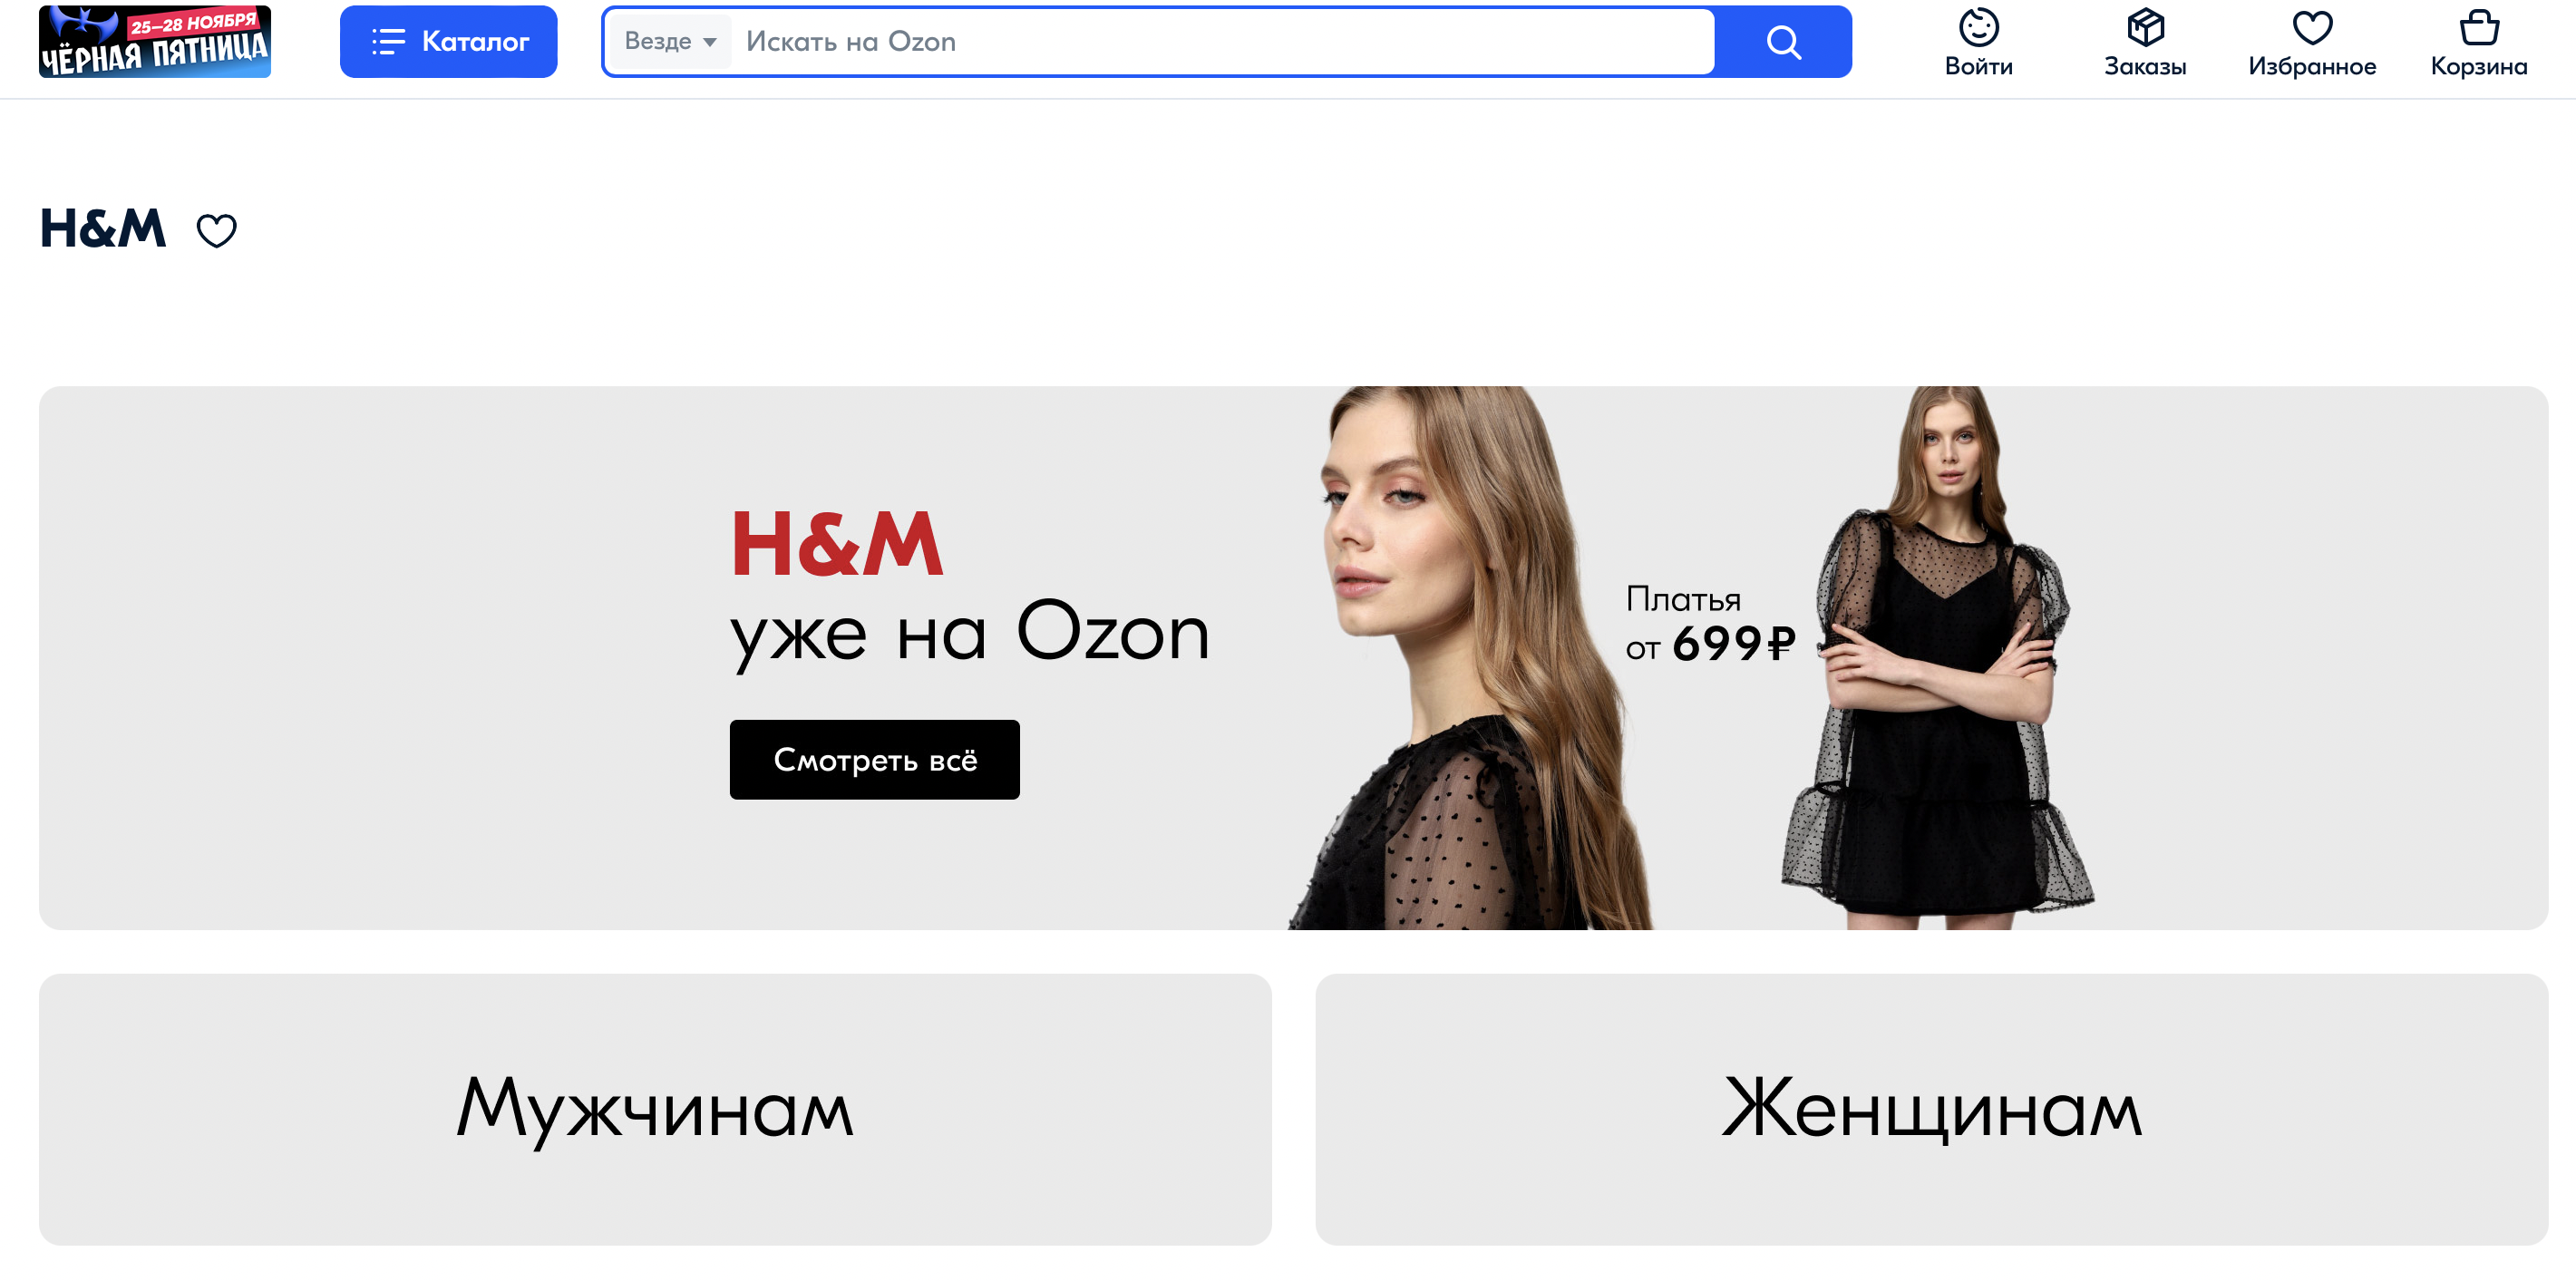 Страница с товарами бренда H&M